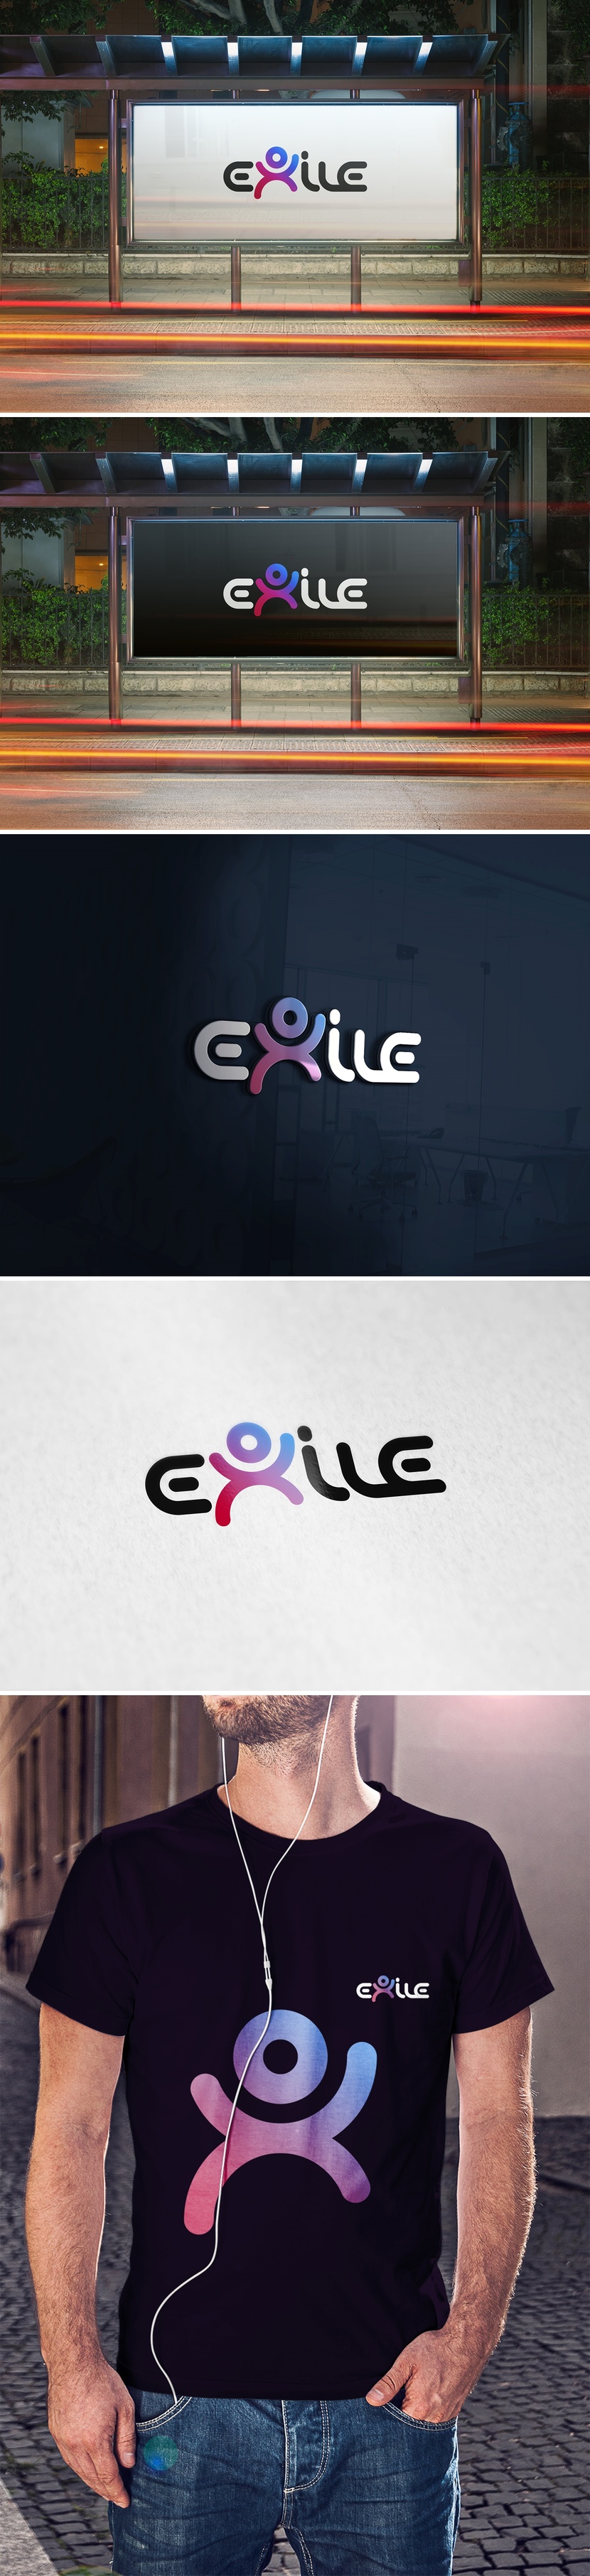 Exile - Разработка логотипа и фирменного стиля EXILE